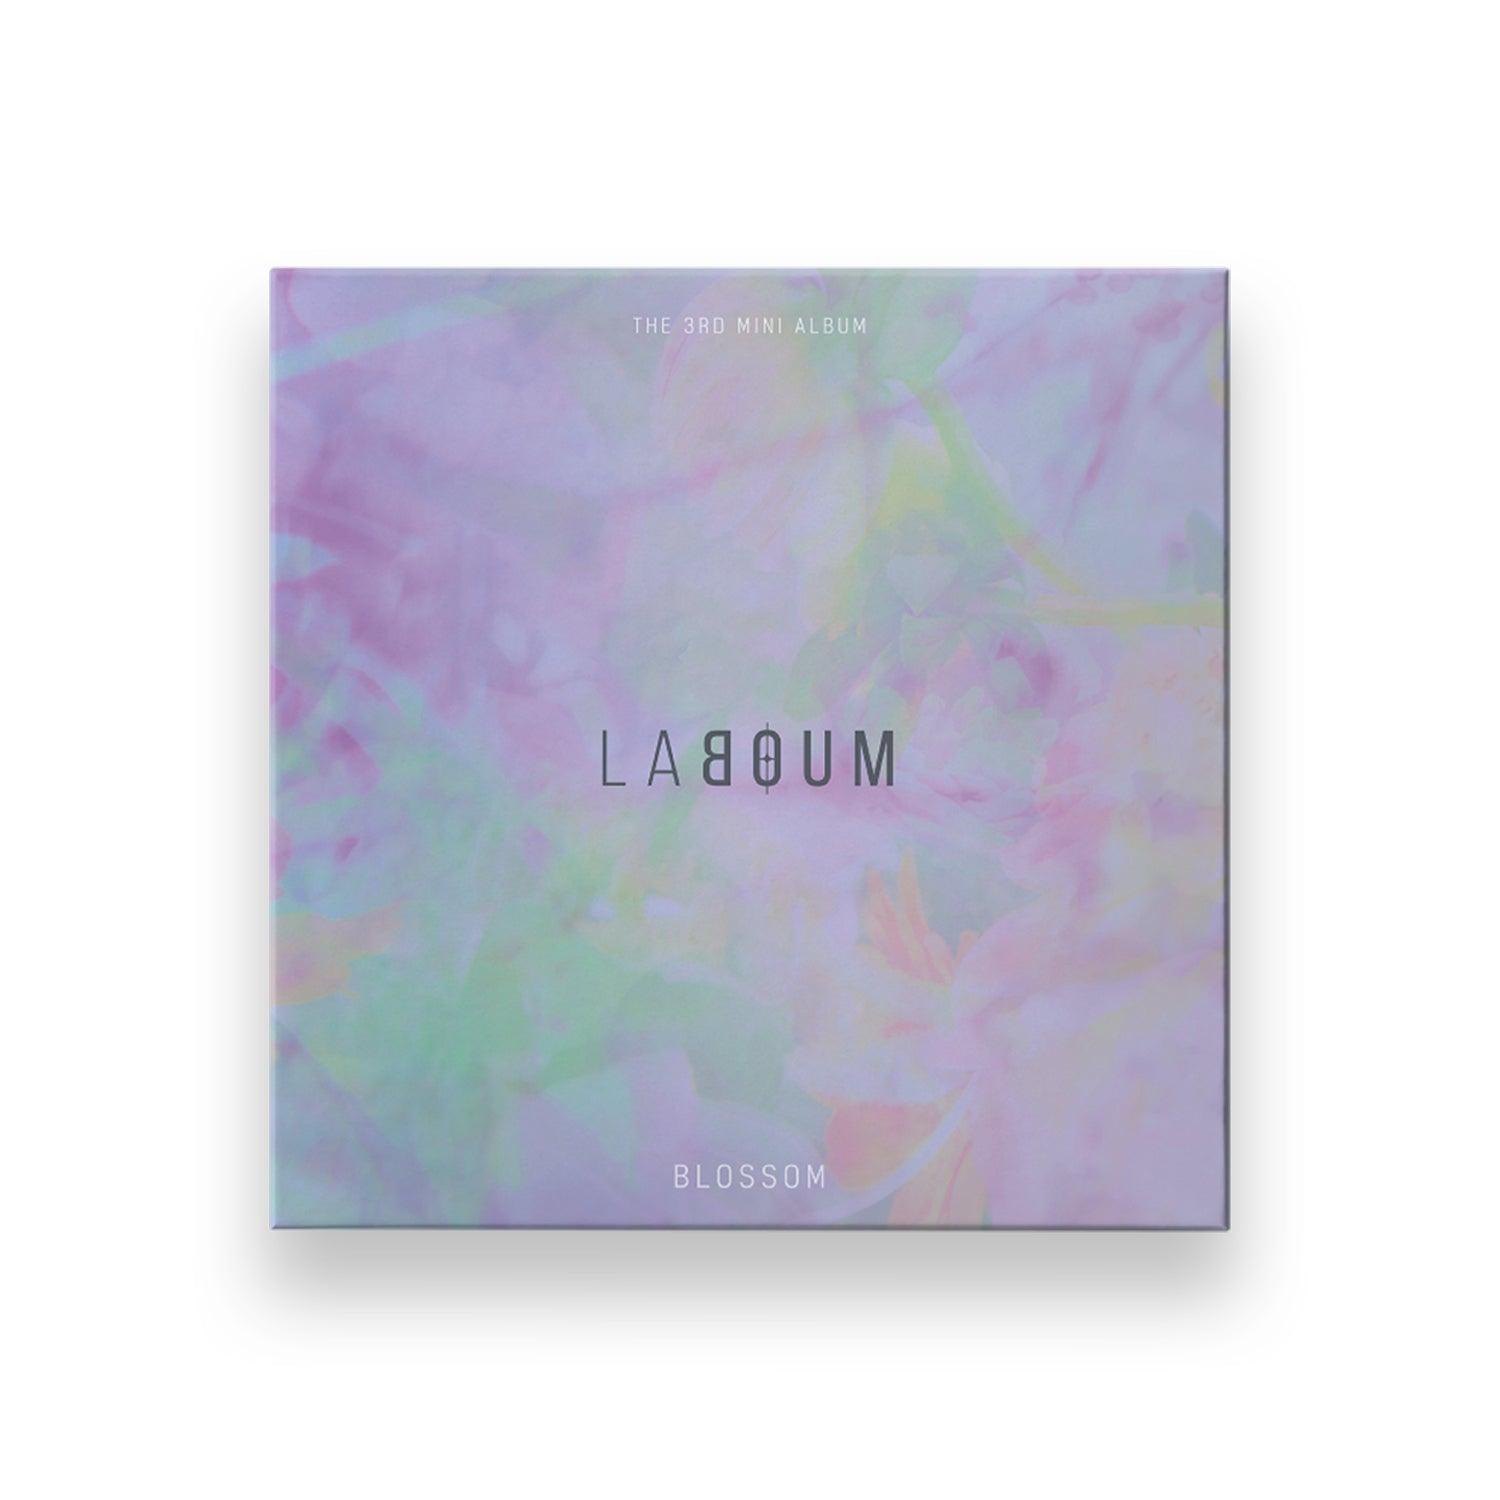 LABOUM 3RD MINI ALBUM 'BLOSSOM' cover